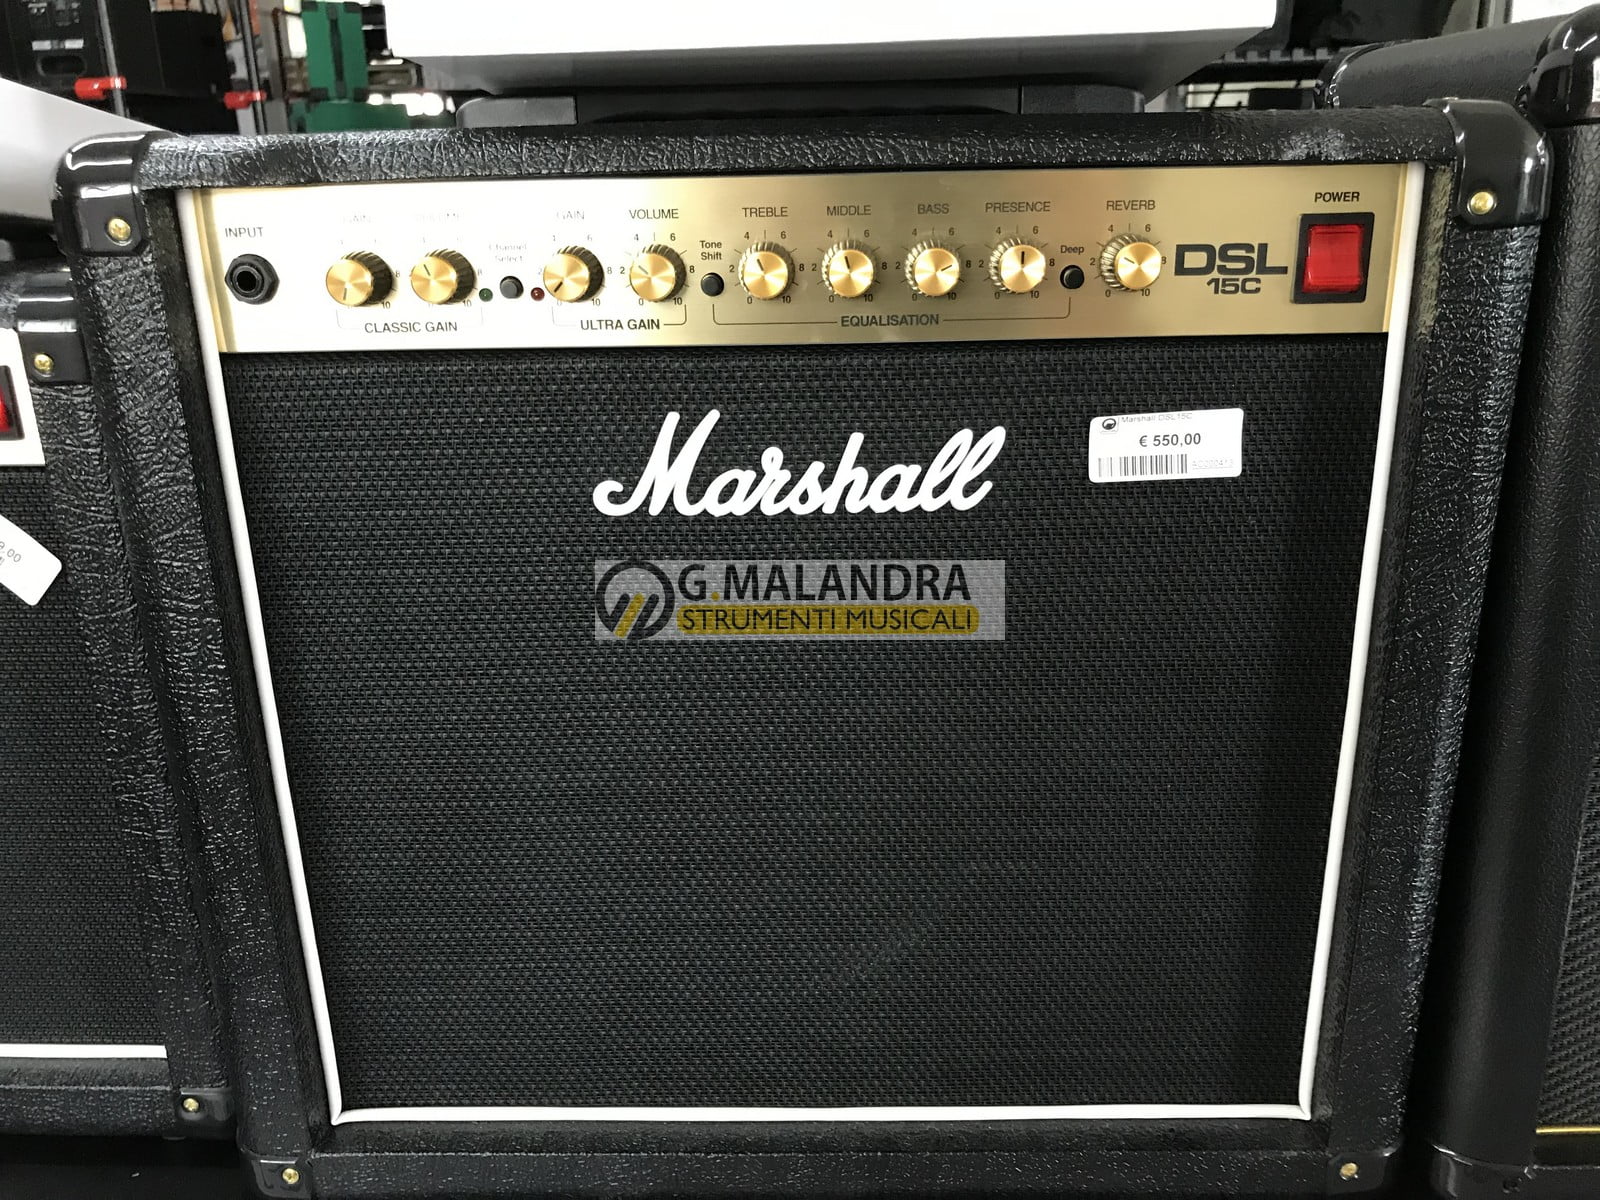 AMPLIFICATORE MARSHALL mod. DSL 15 C VALVOLARE - Strumenti Musicali  G-Malandra